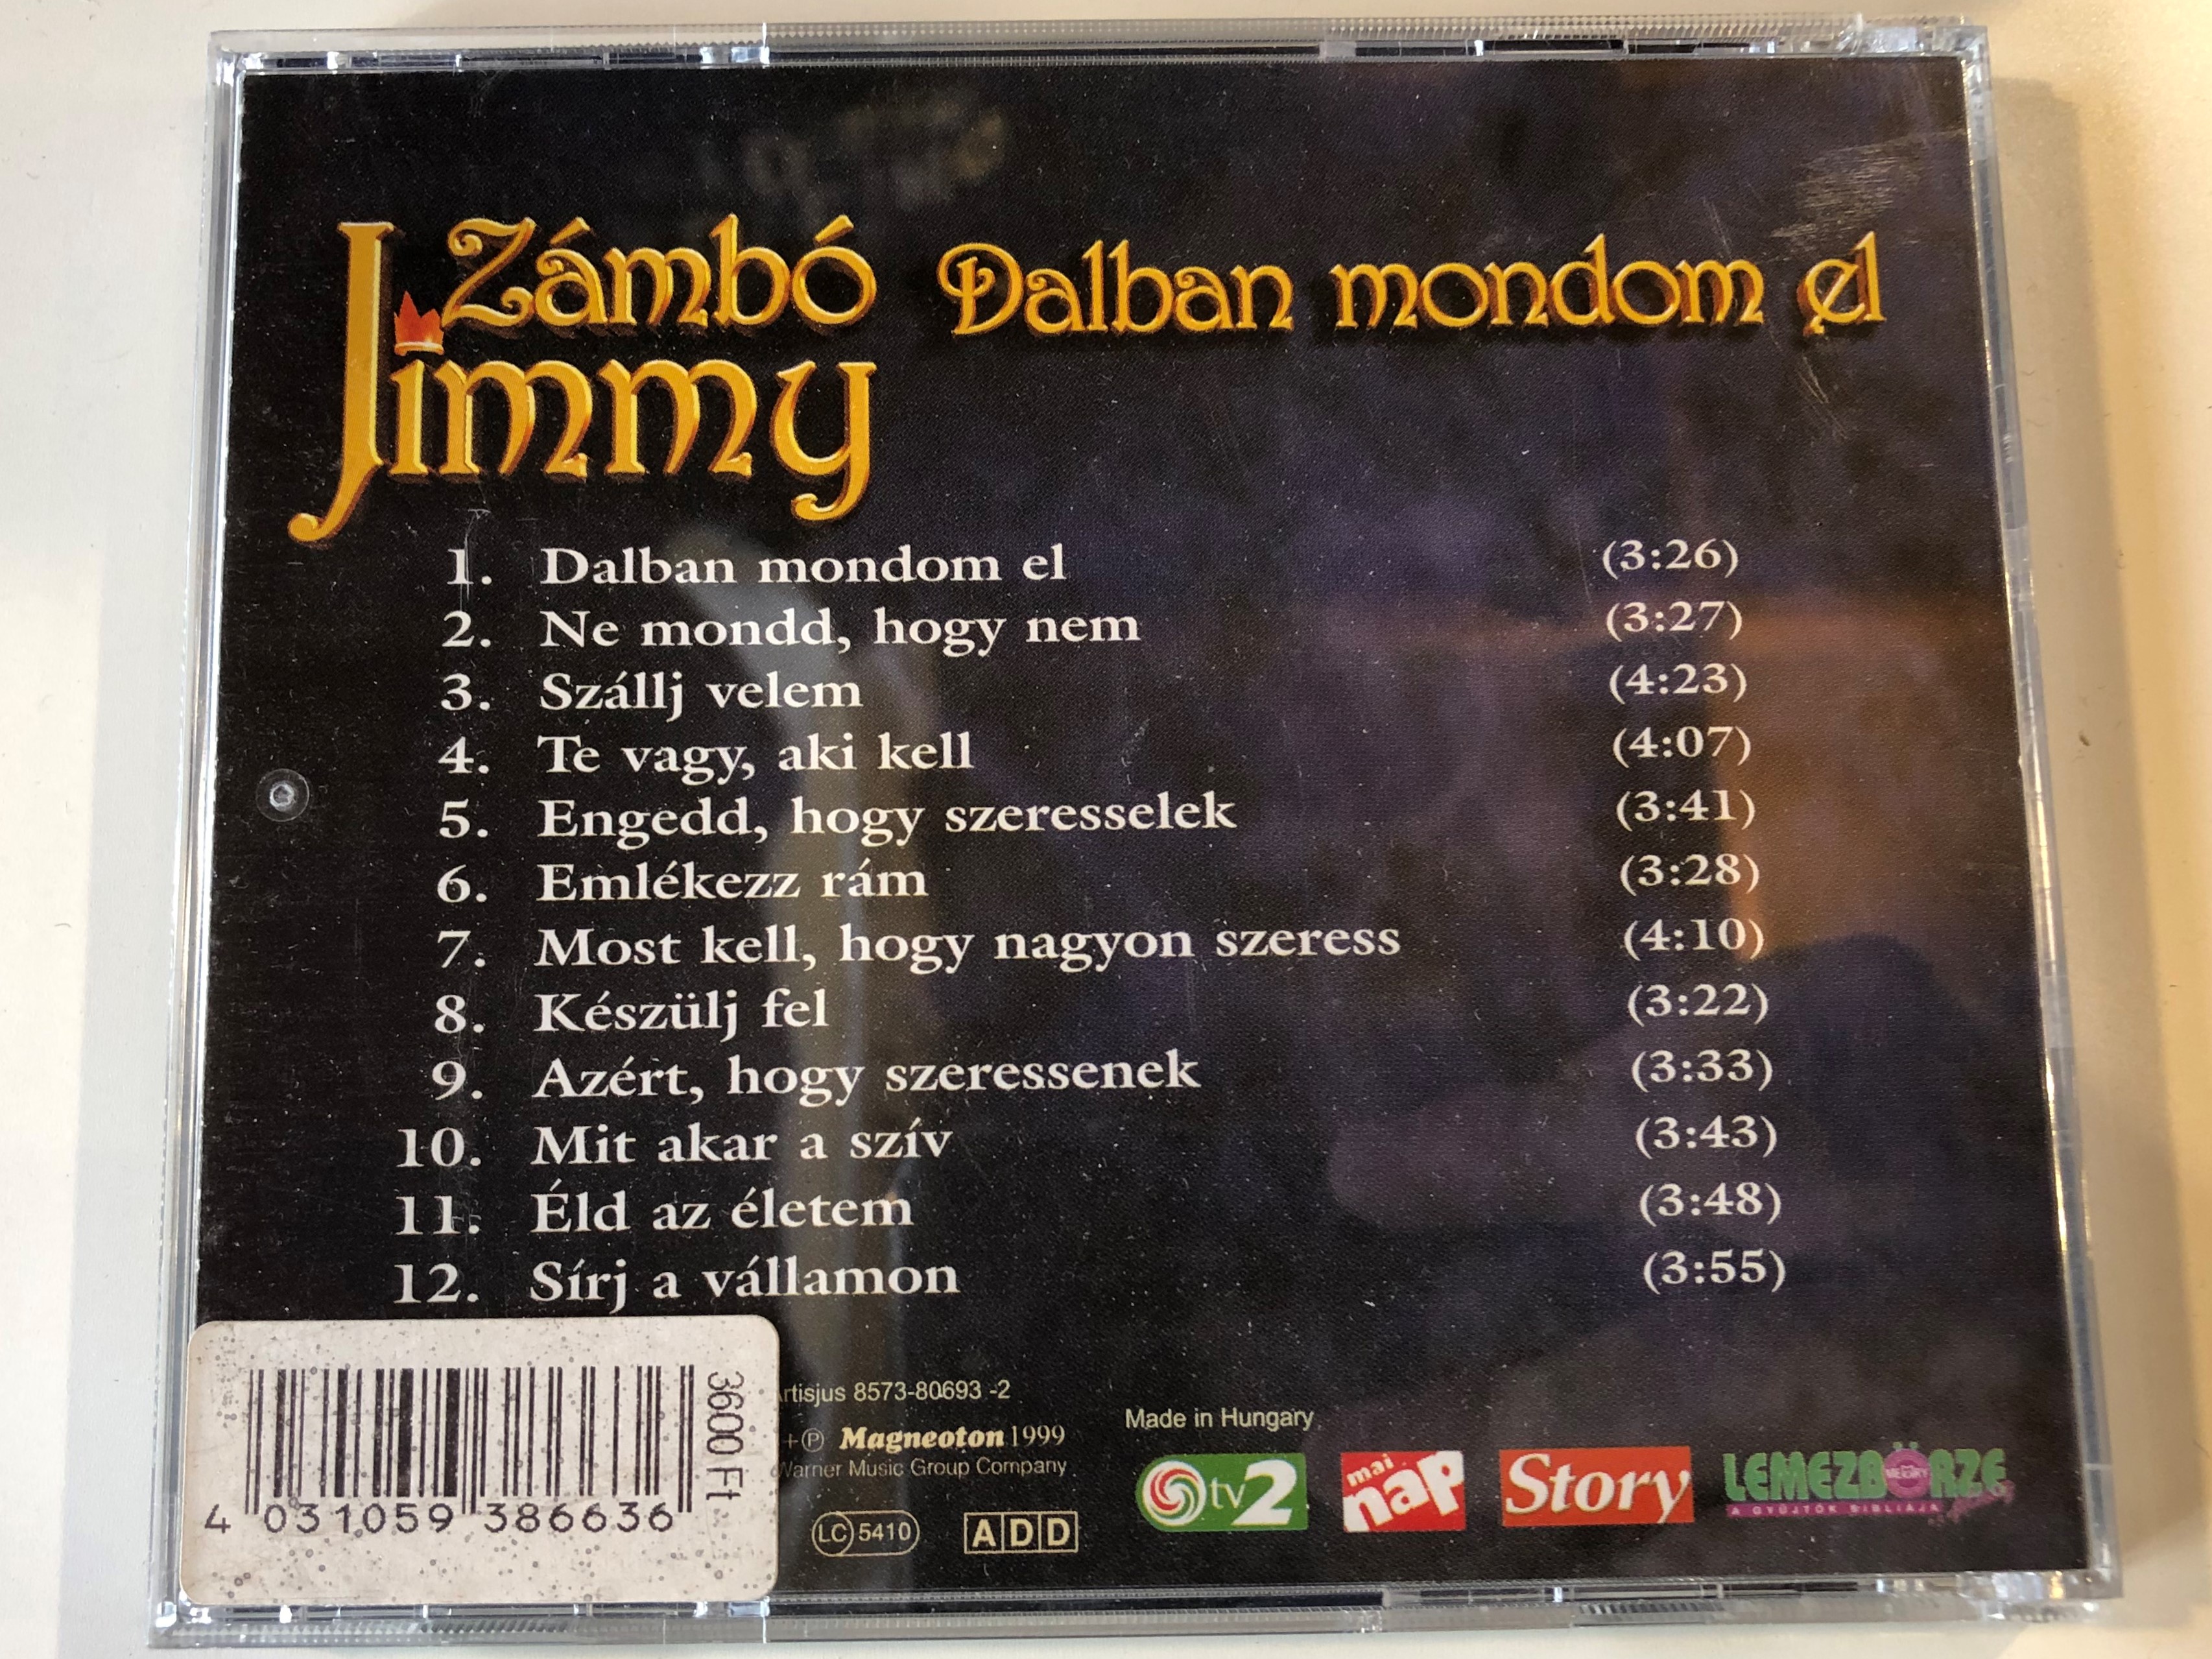 z-mb-jimmy-dalban-mondom-el-magneoton-audio-cd-1999-8573-80693-2-3-.jpg